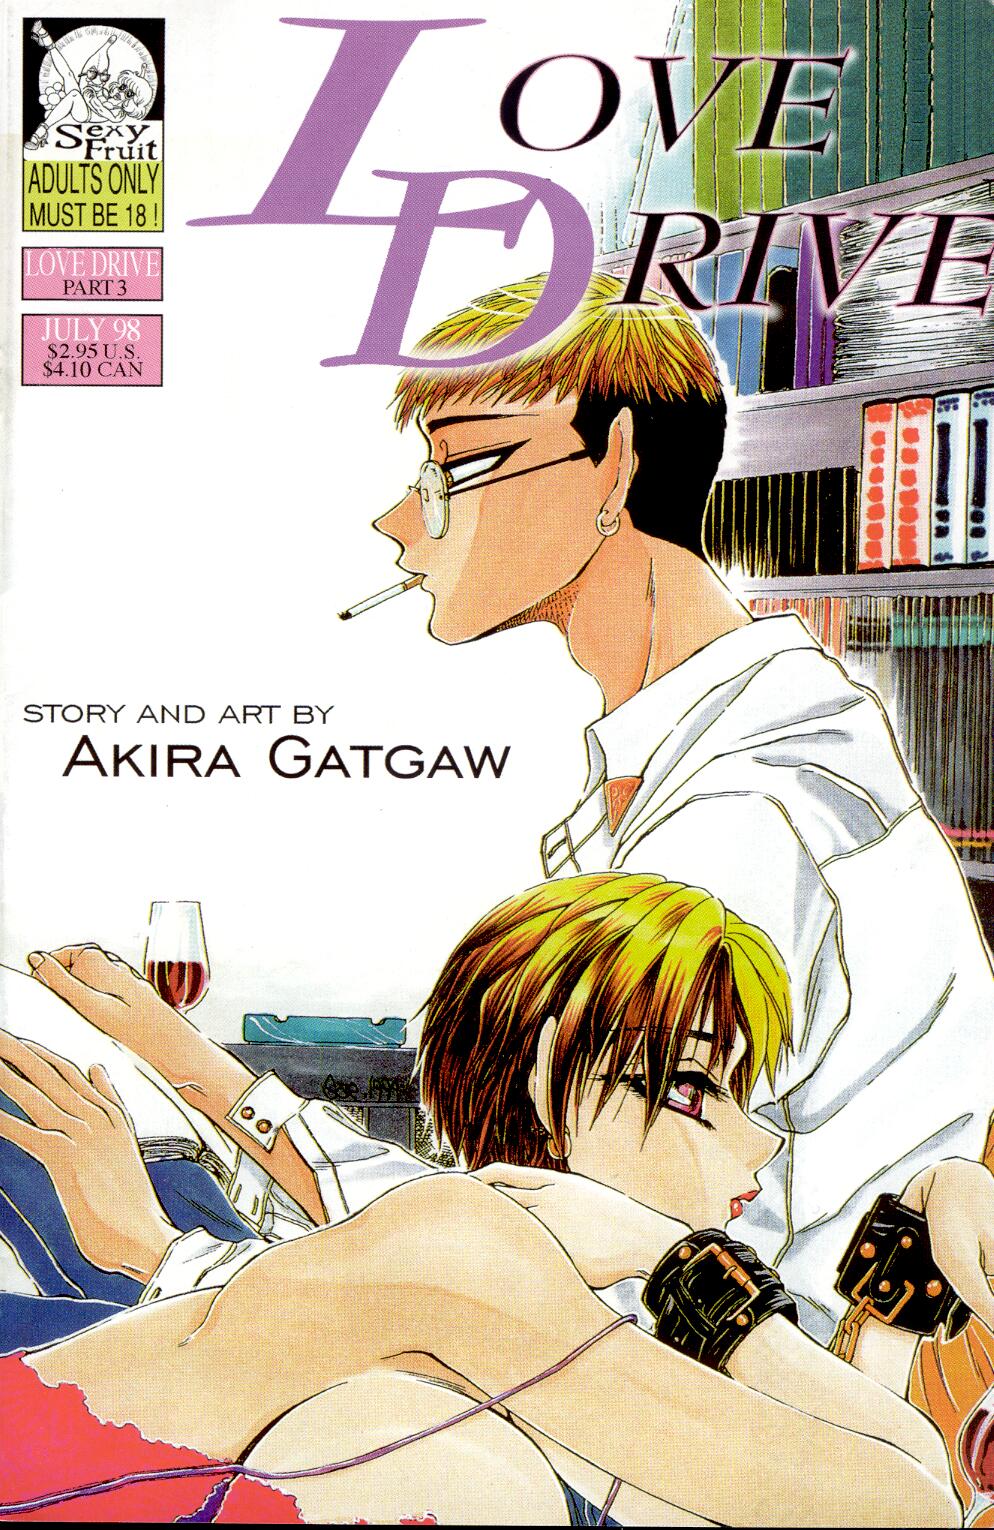 [Akira Gatgaw] Love Drive Vol 1 Part 3 [English] 